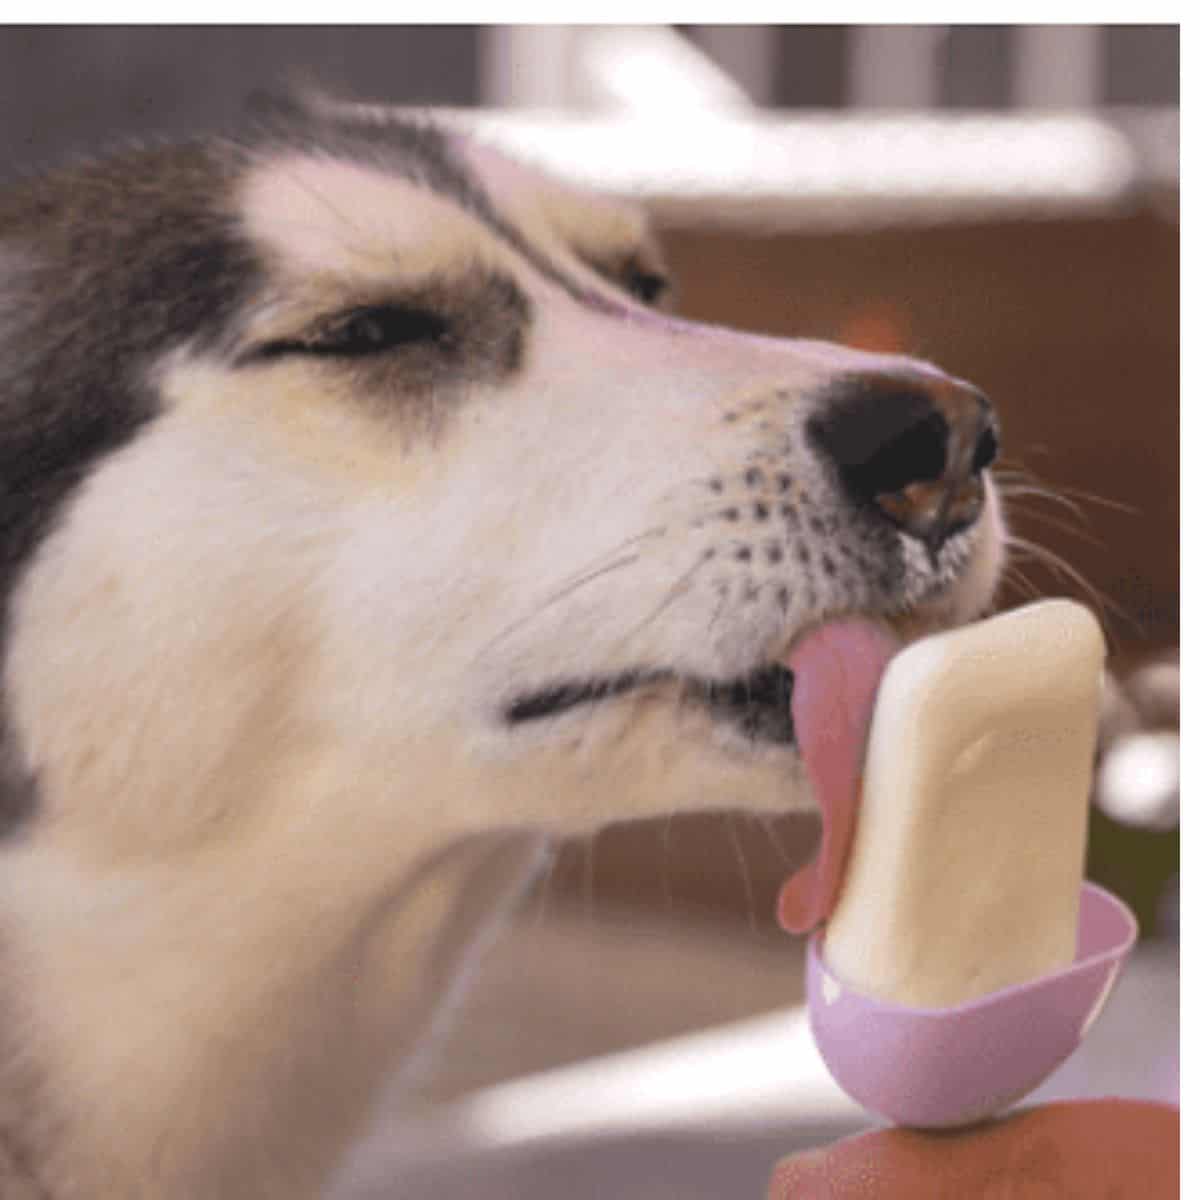 Grey and white husky dog enjoying homemade ice cream in a purple ice cream holder.